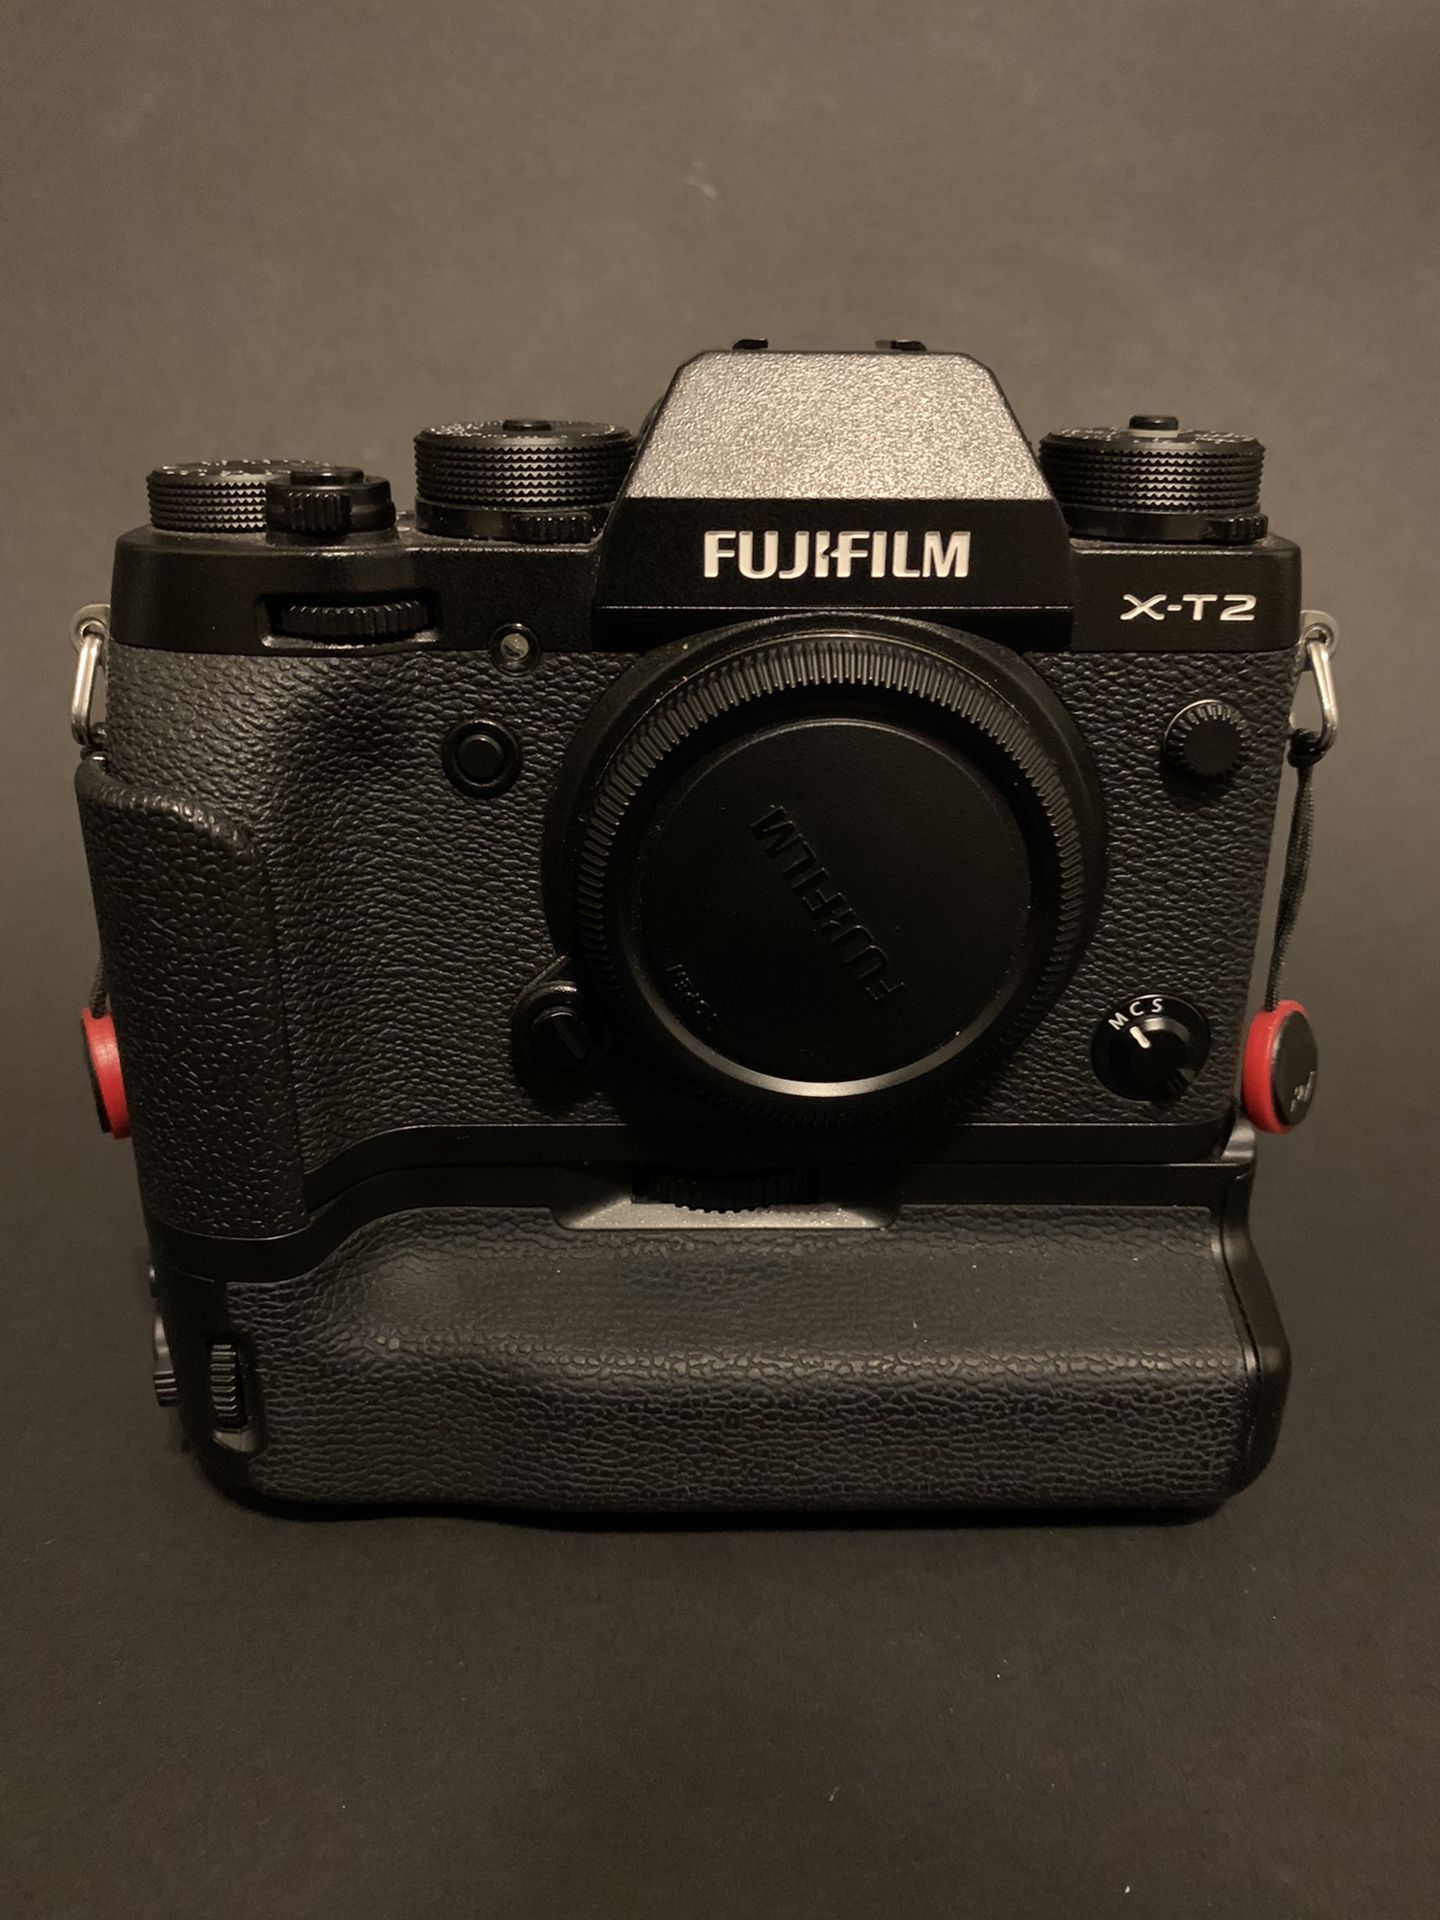 Fuji xt2 with a mekie battery grip